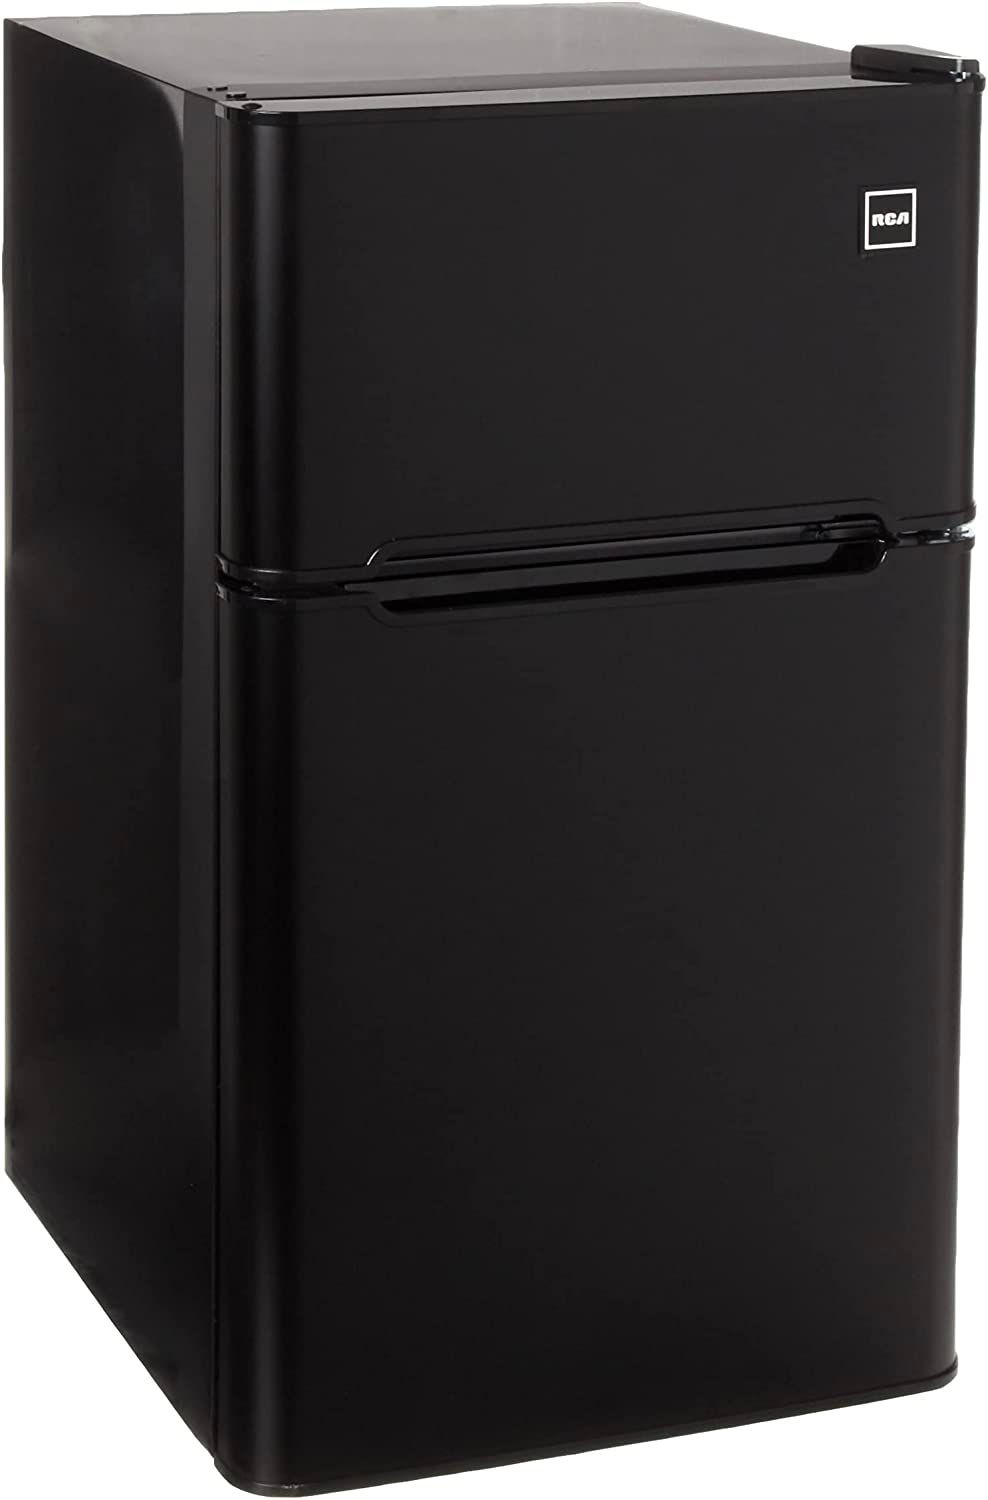 RCA 3.2立方英尺双门迷你冰箱与冷冻室RFR835，黑色